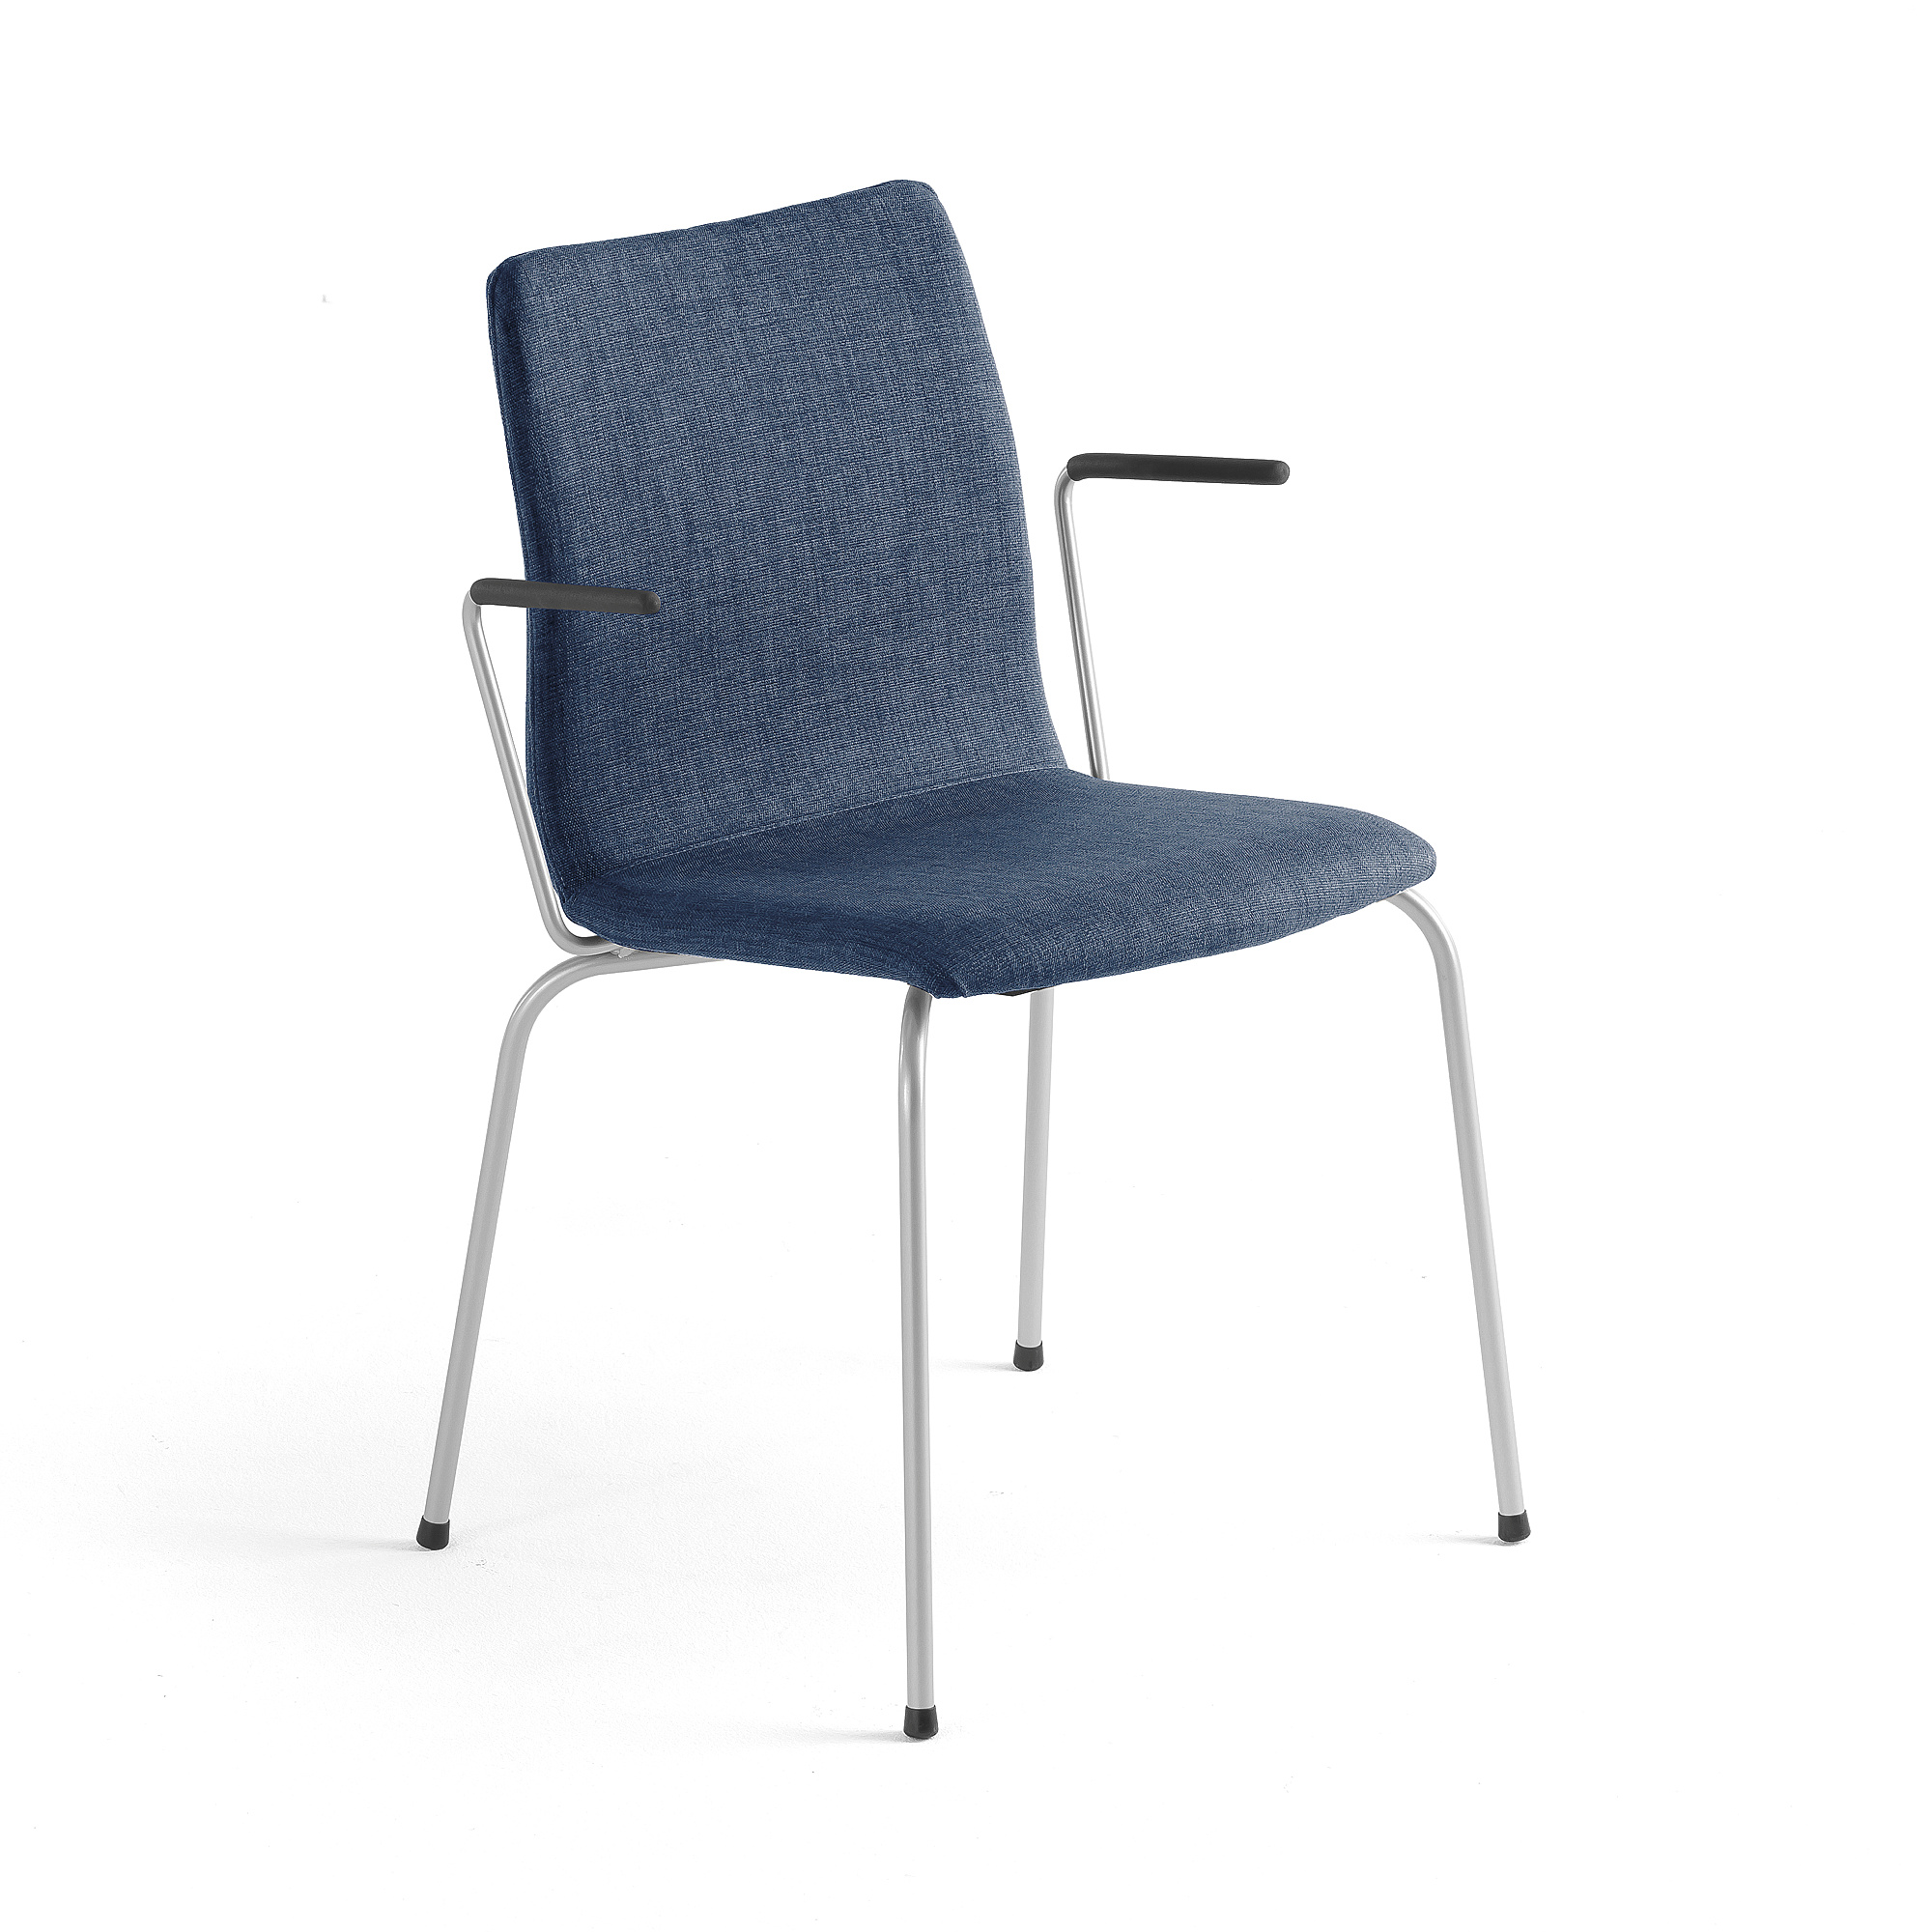 Konferenčná stolička OTTAWA, s opierkami rúk, modrá/šedá